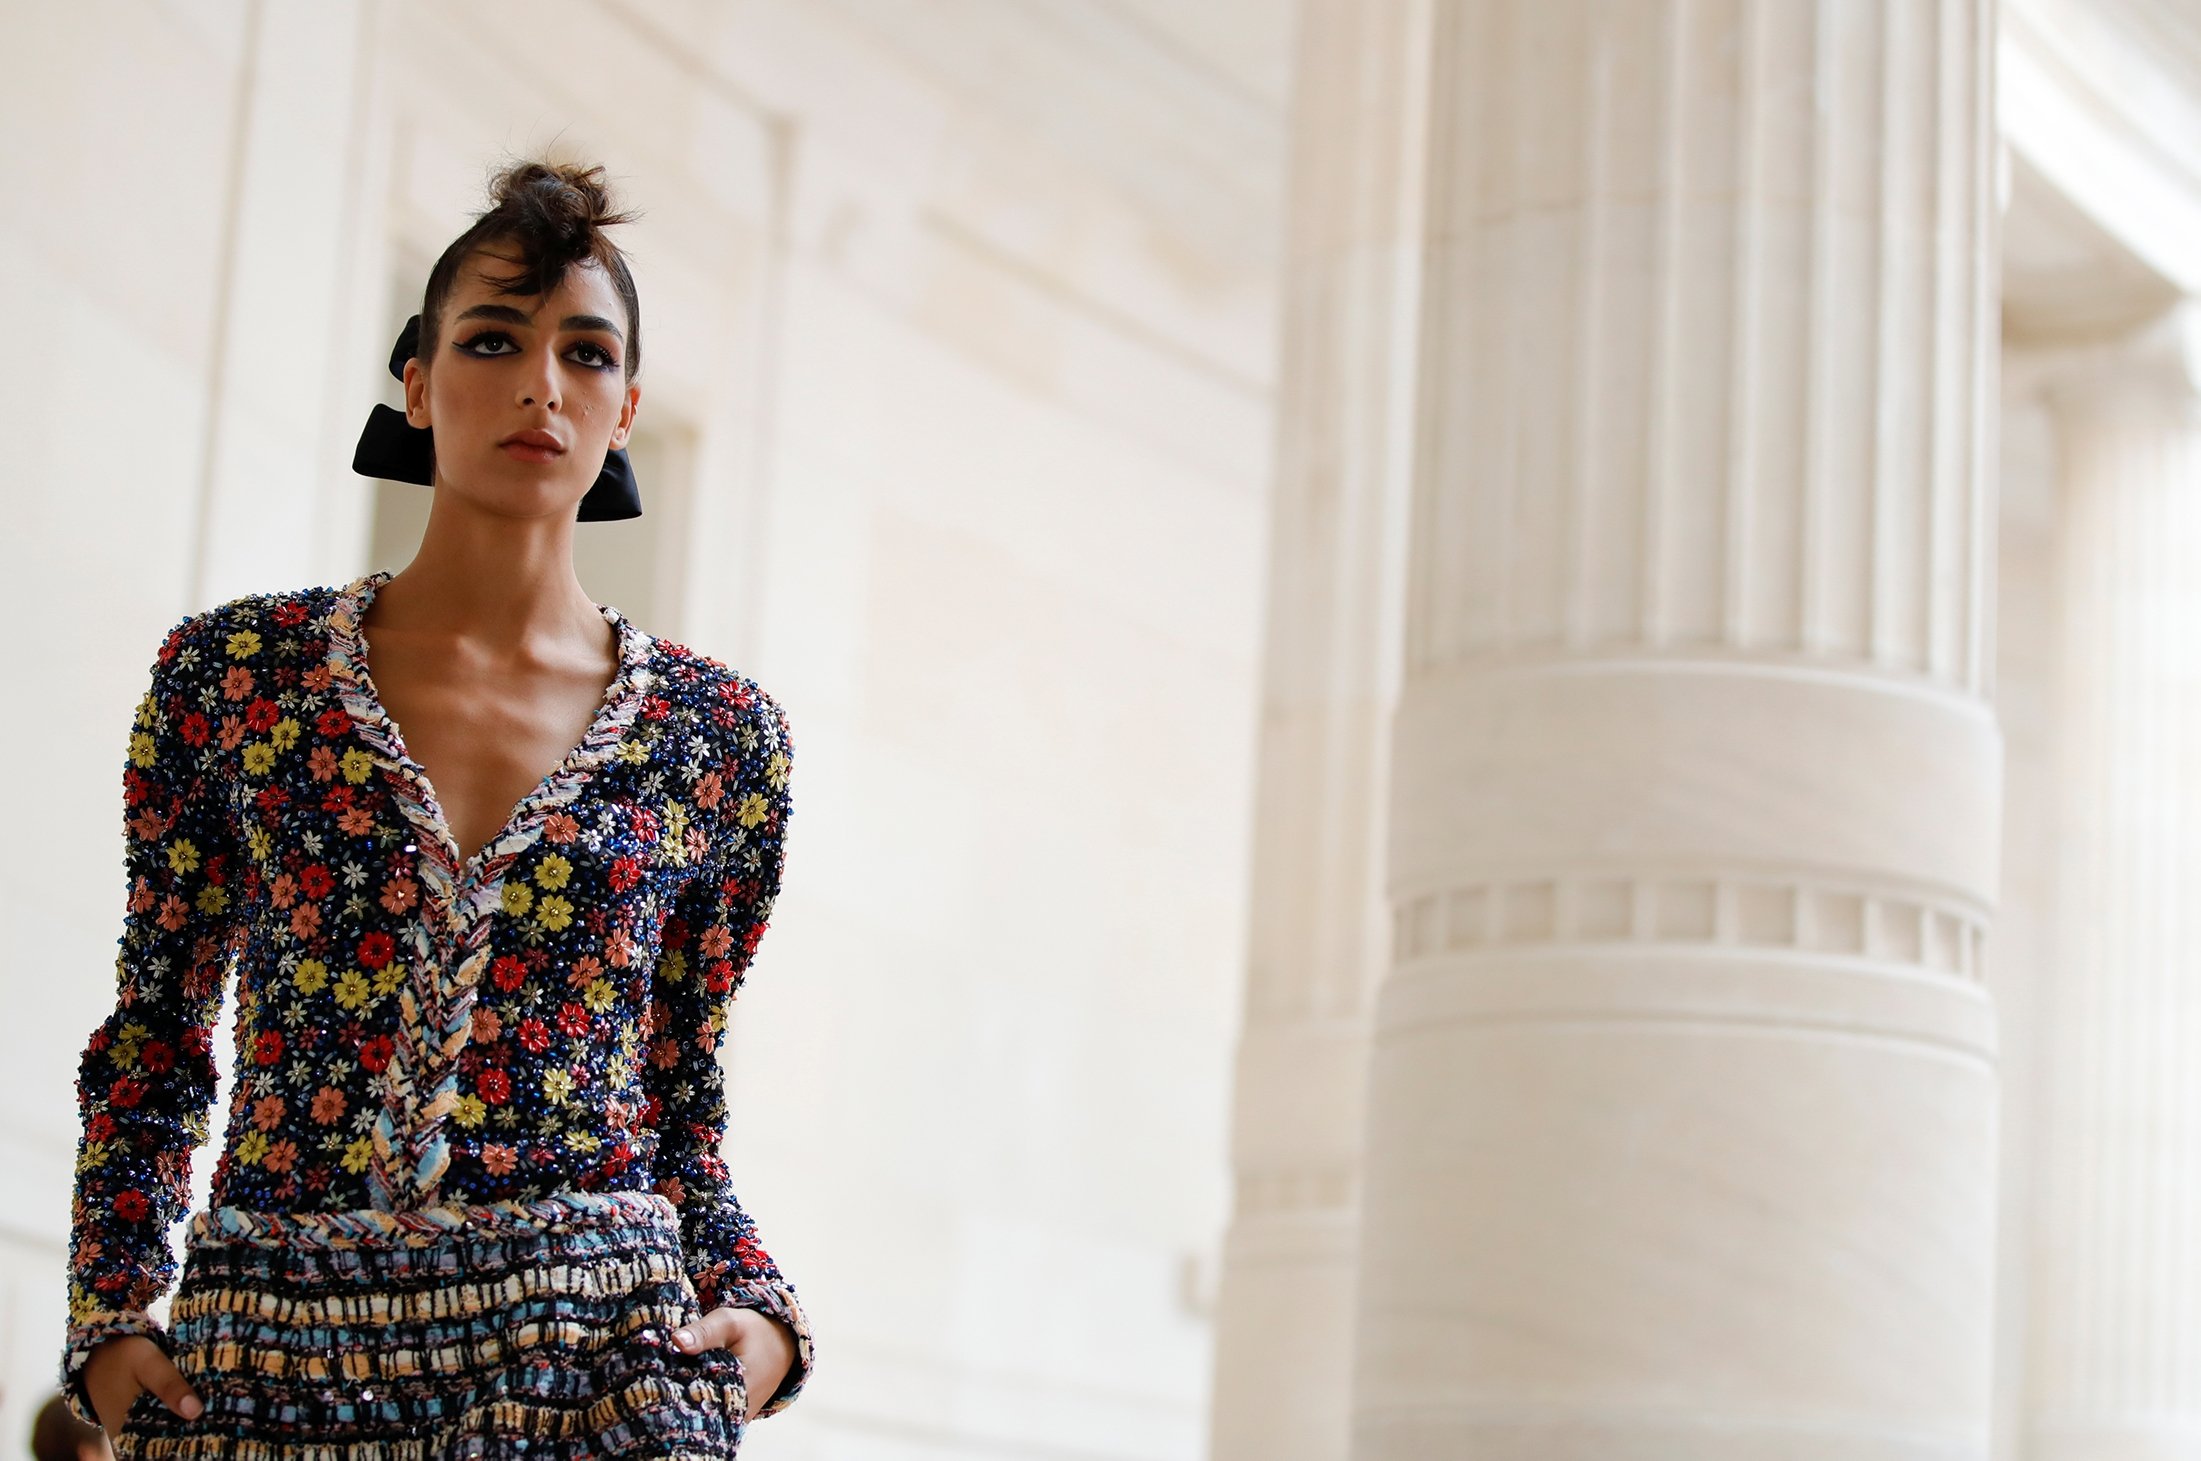 Chanel, Armani imbue Paris fashion shows with colors, flowers